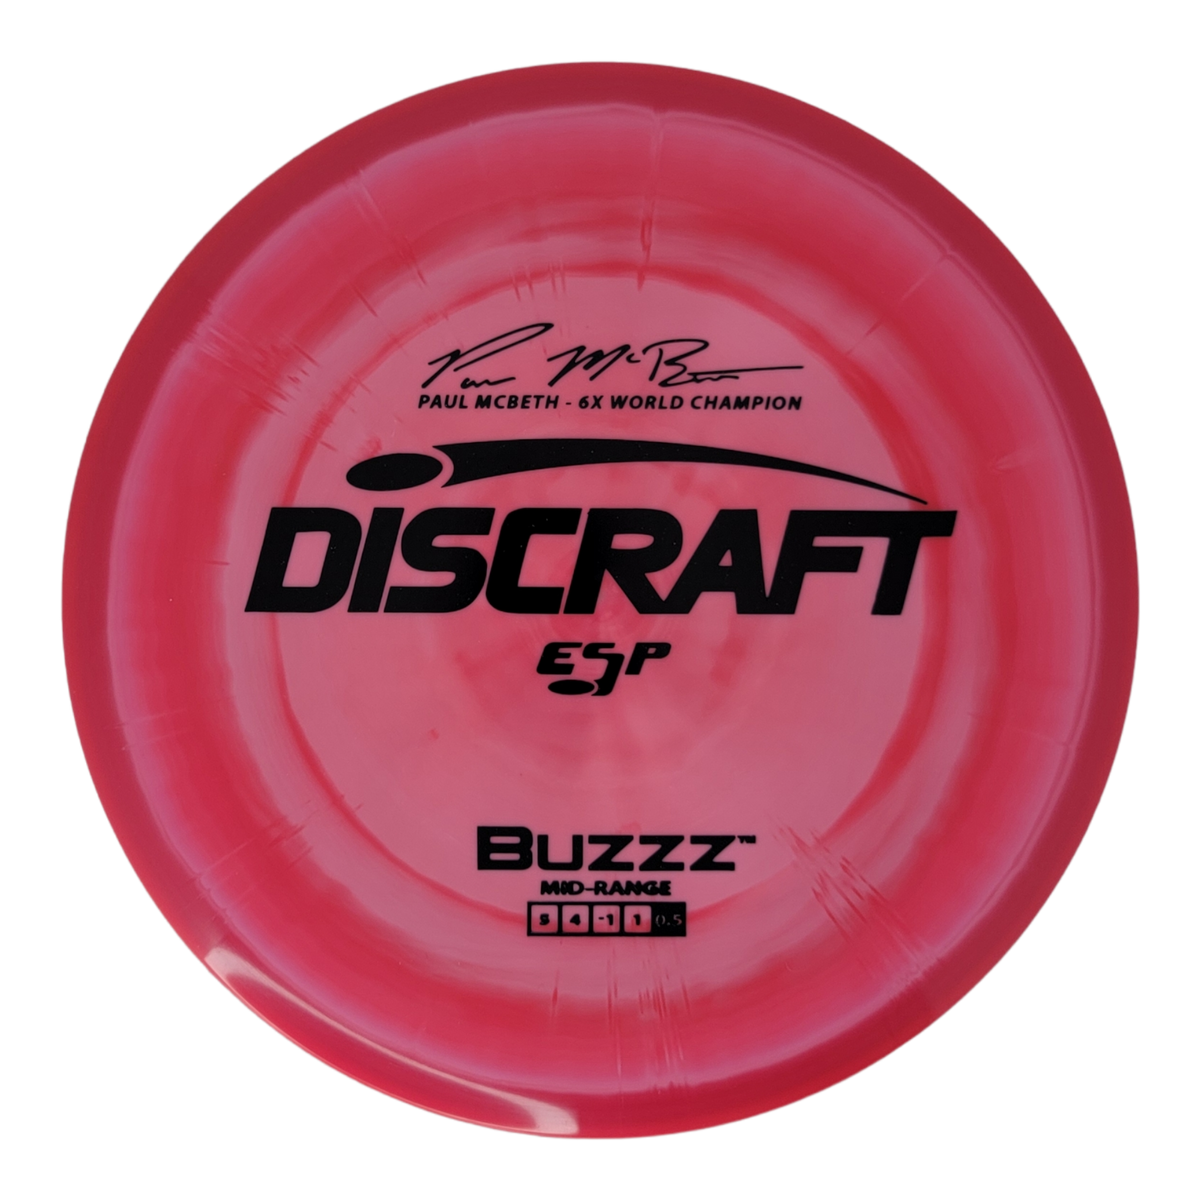 Discraft Paul McBeth 6x Signature Series ESP Buzzz